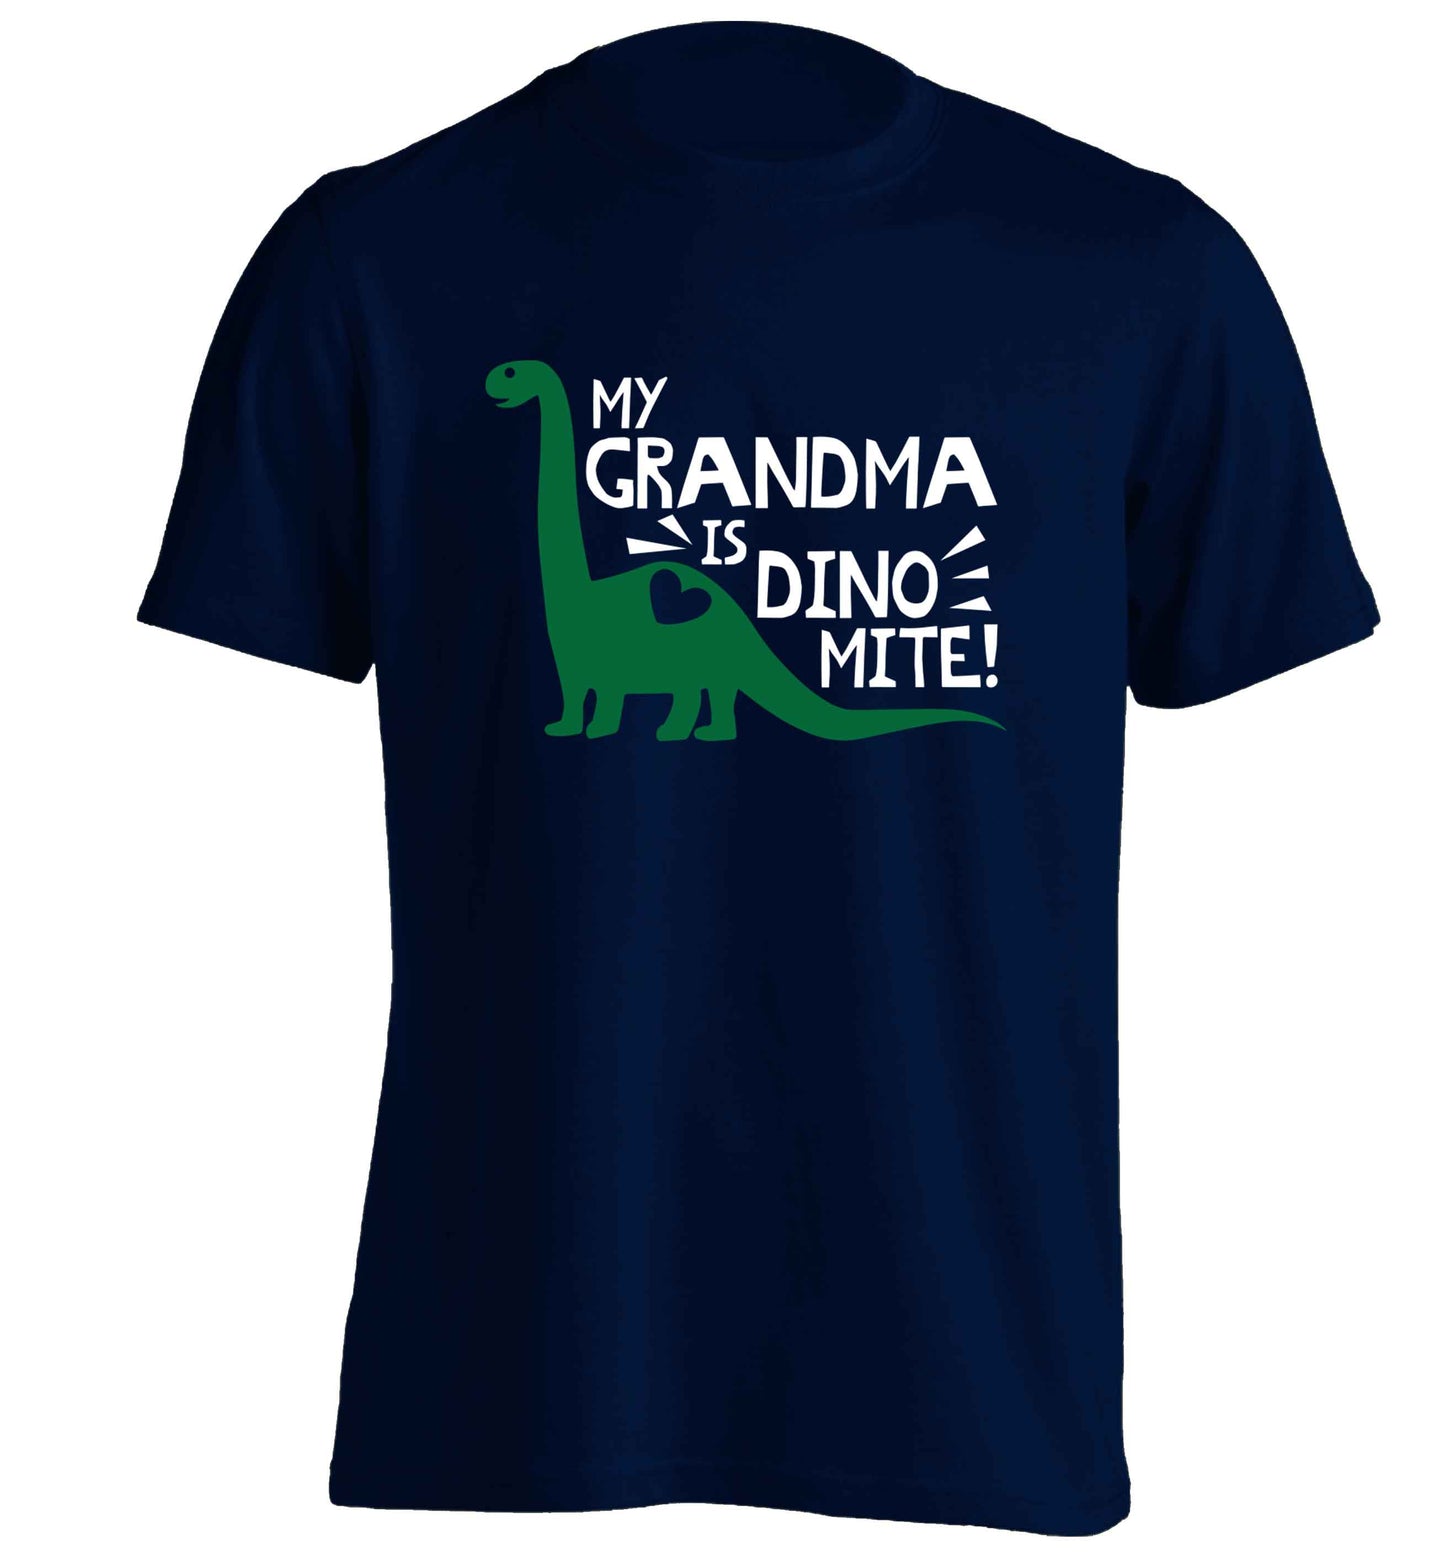 My grandma is dinomite! adults unisex navy Tshirt 2XL